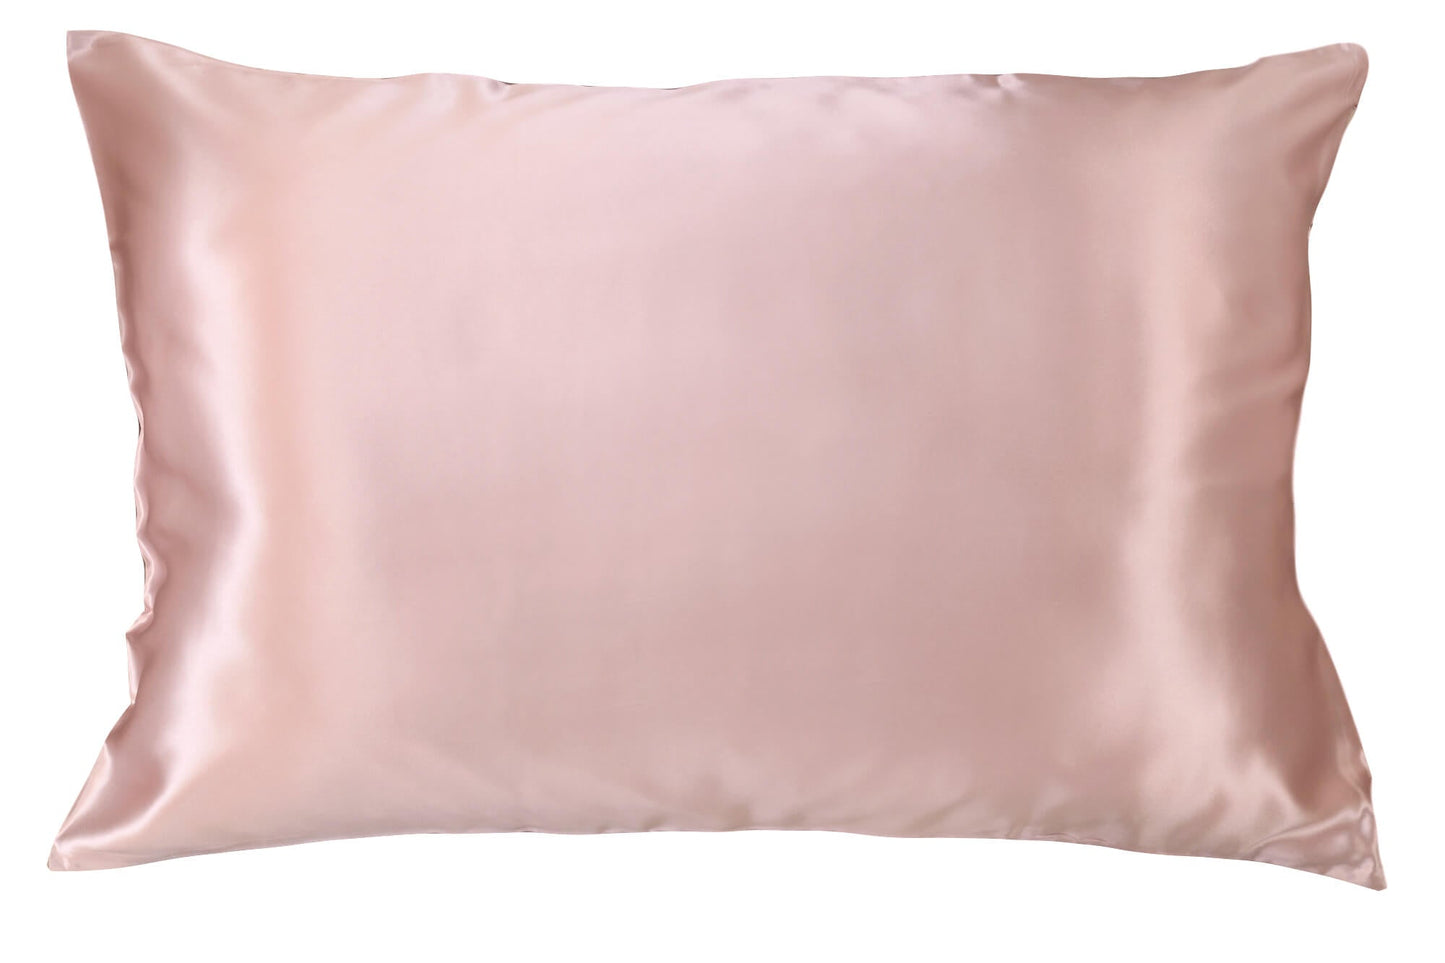 25 Momme Silk Pillowcase - Standard Vintage Pink Zipper Closure - Outlet